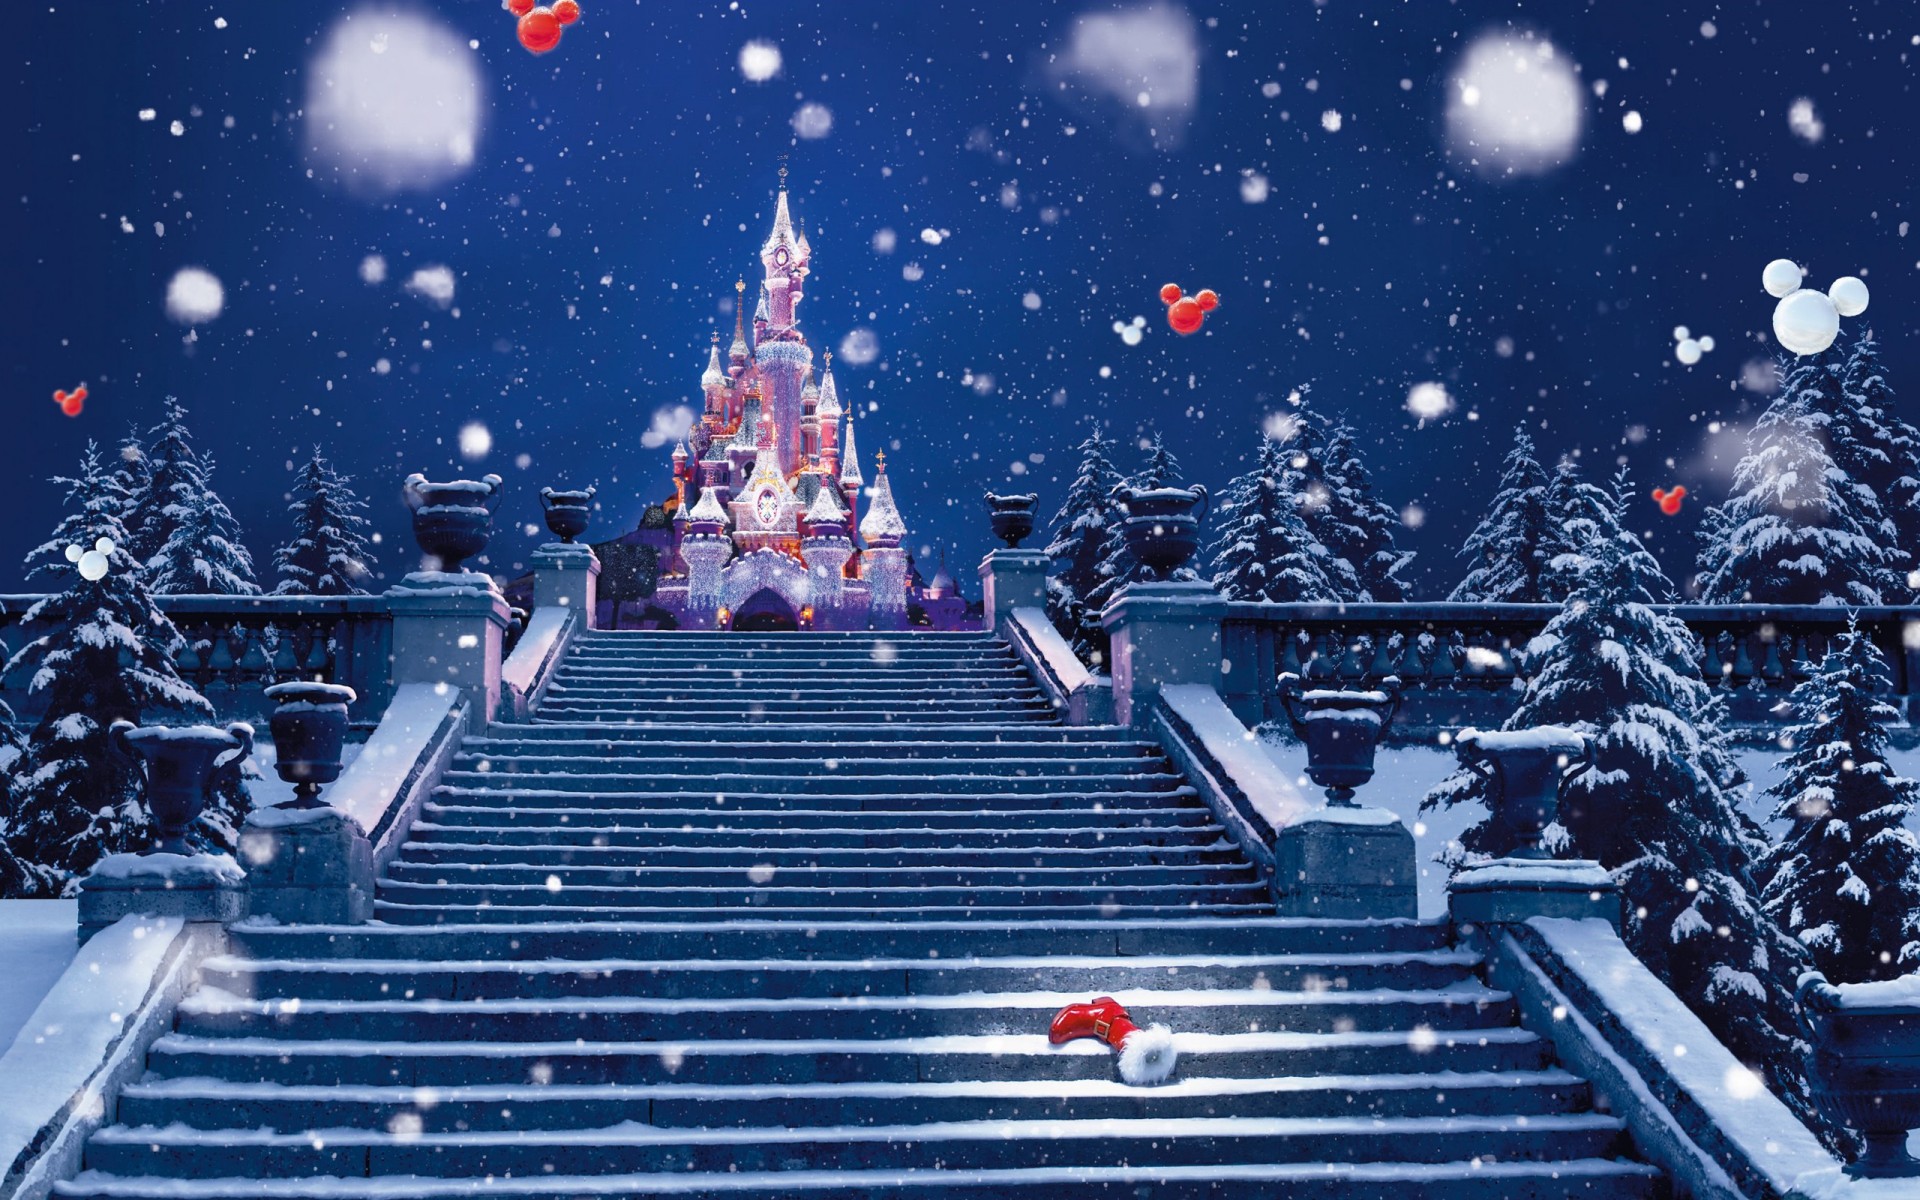 Holidays Christmas Children Disney Winter Snow Snowing Flakes Drops